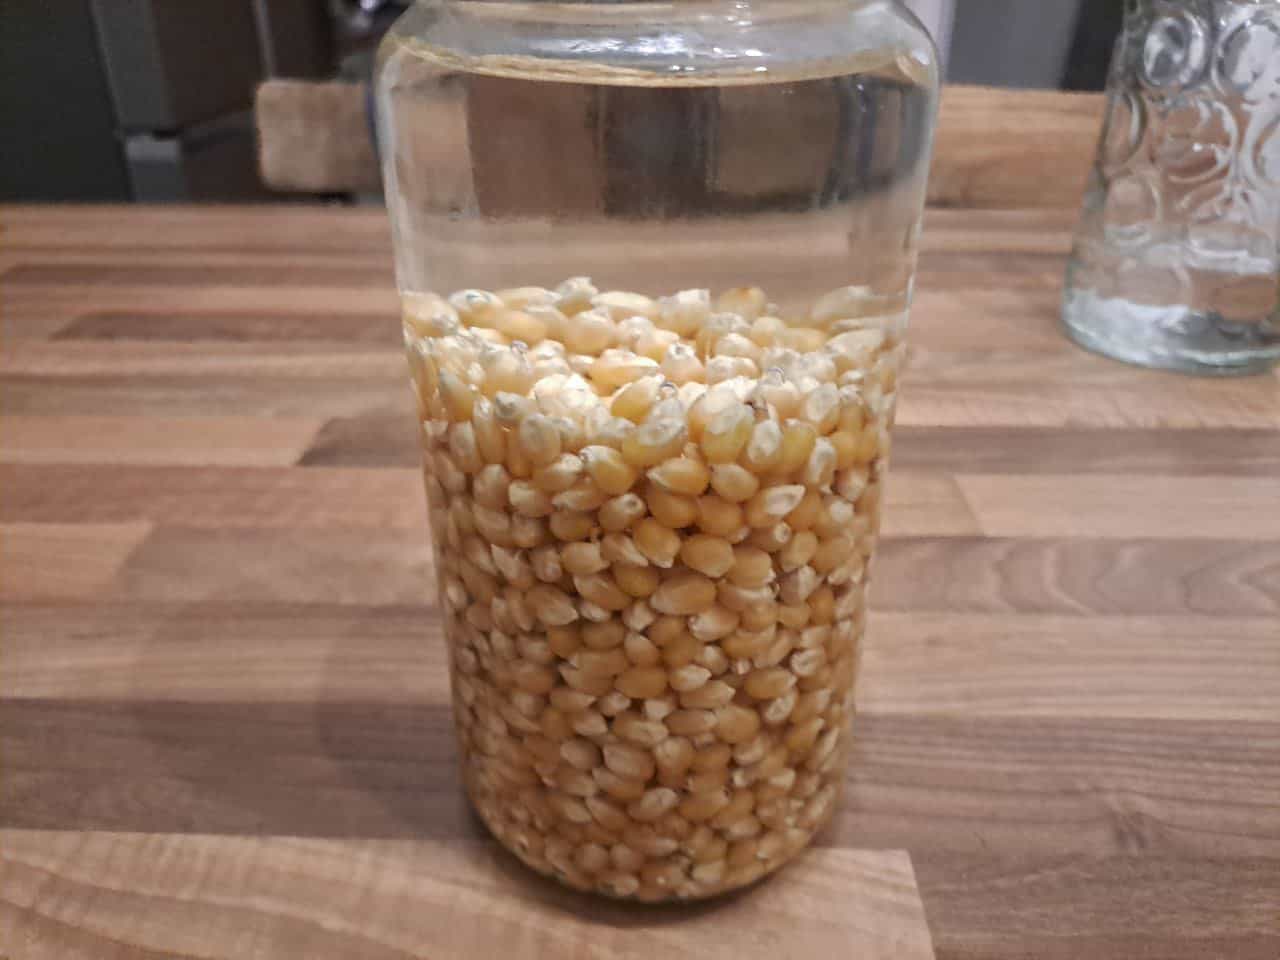 Add water to popcorn grain spawn jar